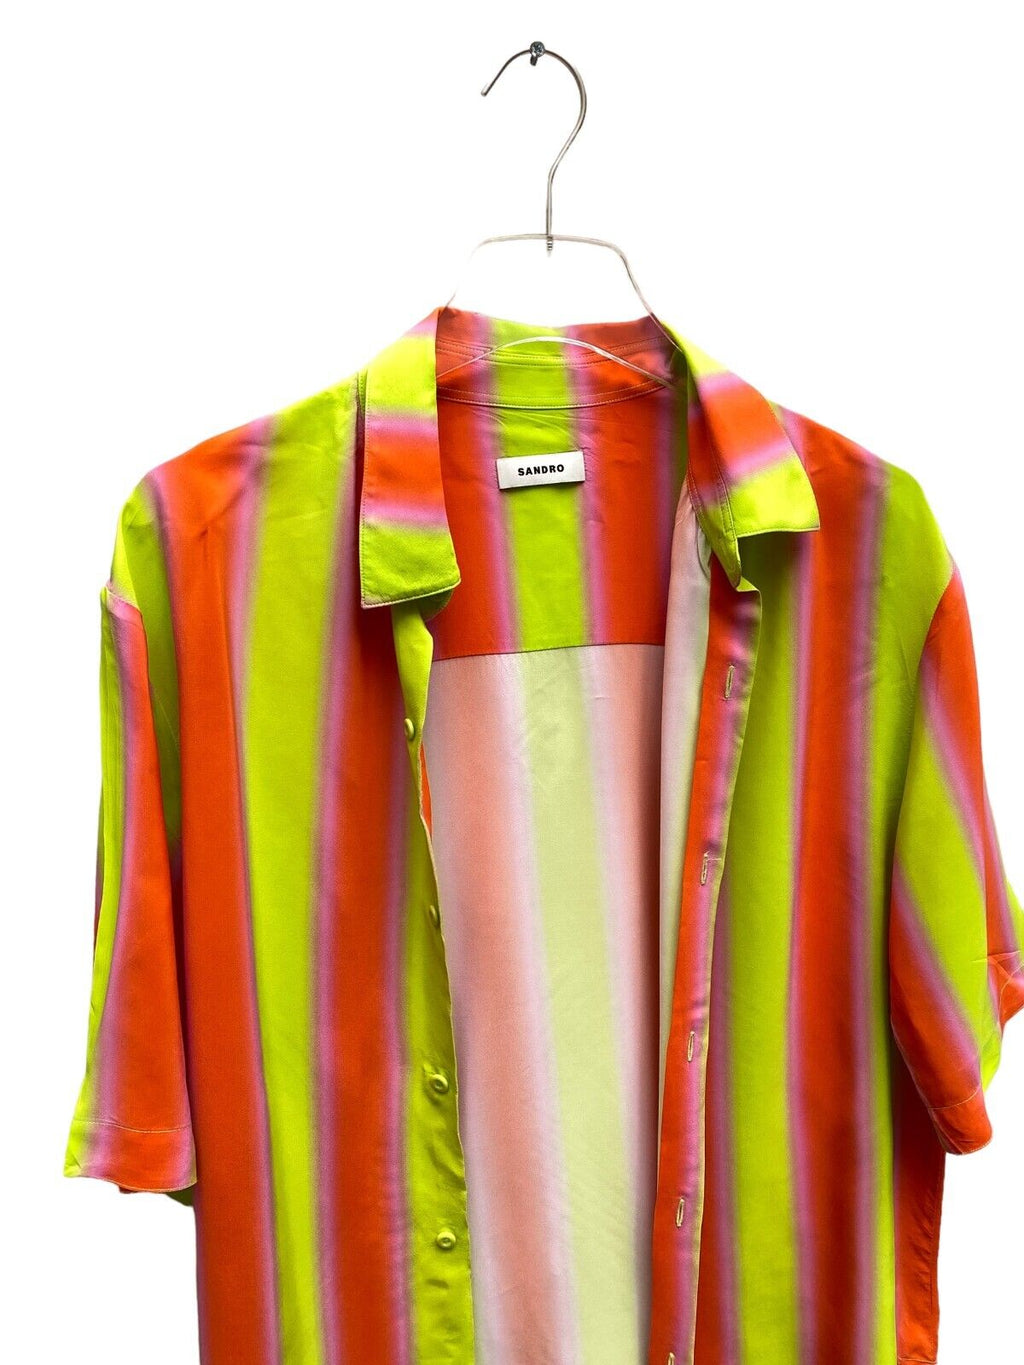 Neon Green Orange Short Sleeves Shirt Size M Medium